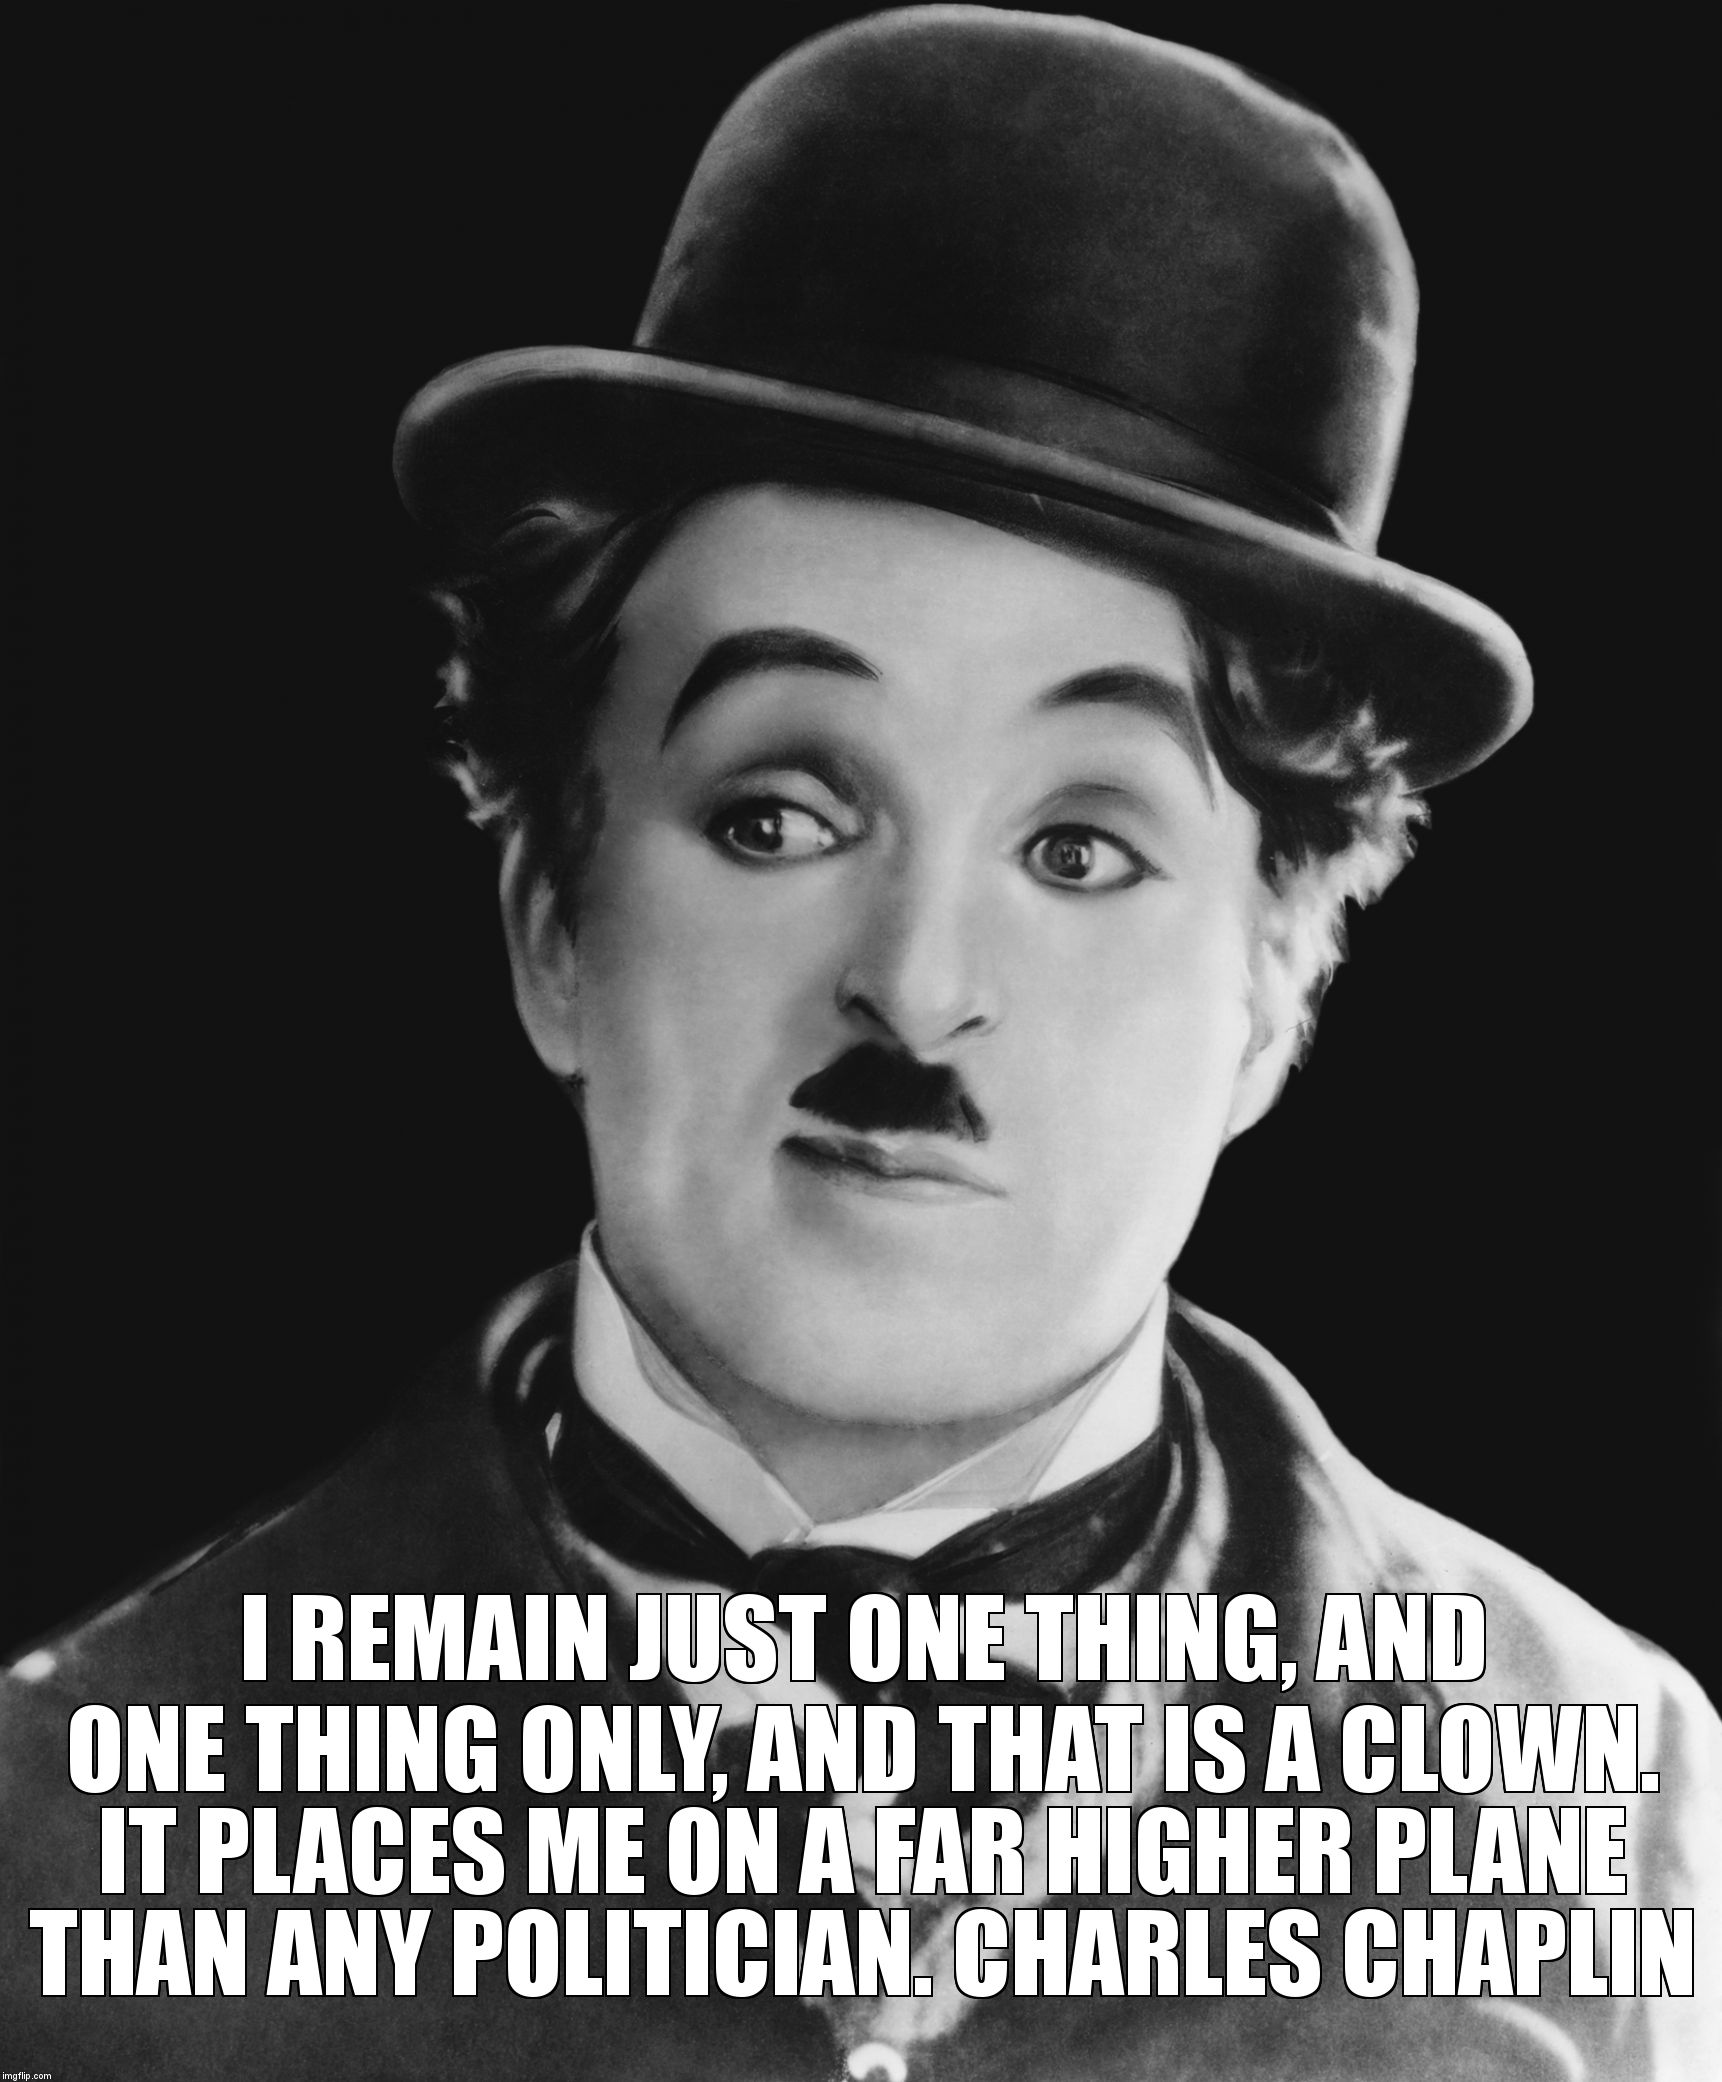 Charlie Chaplin Quote - Imgflip